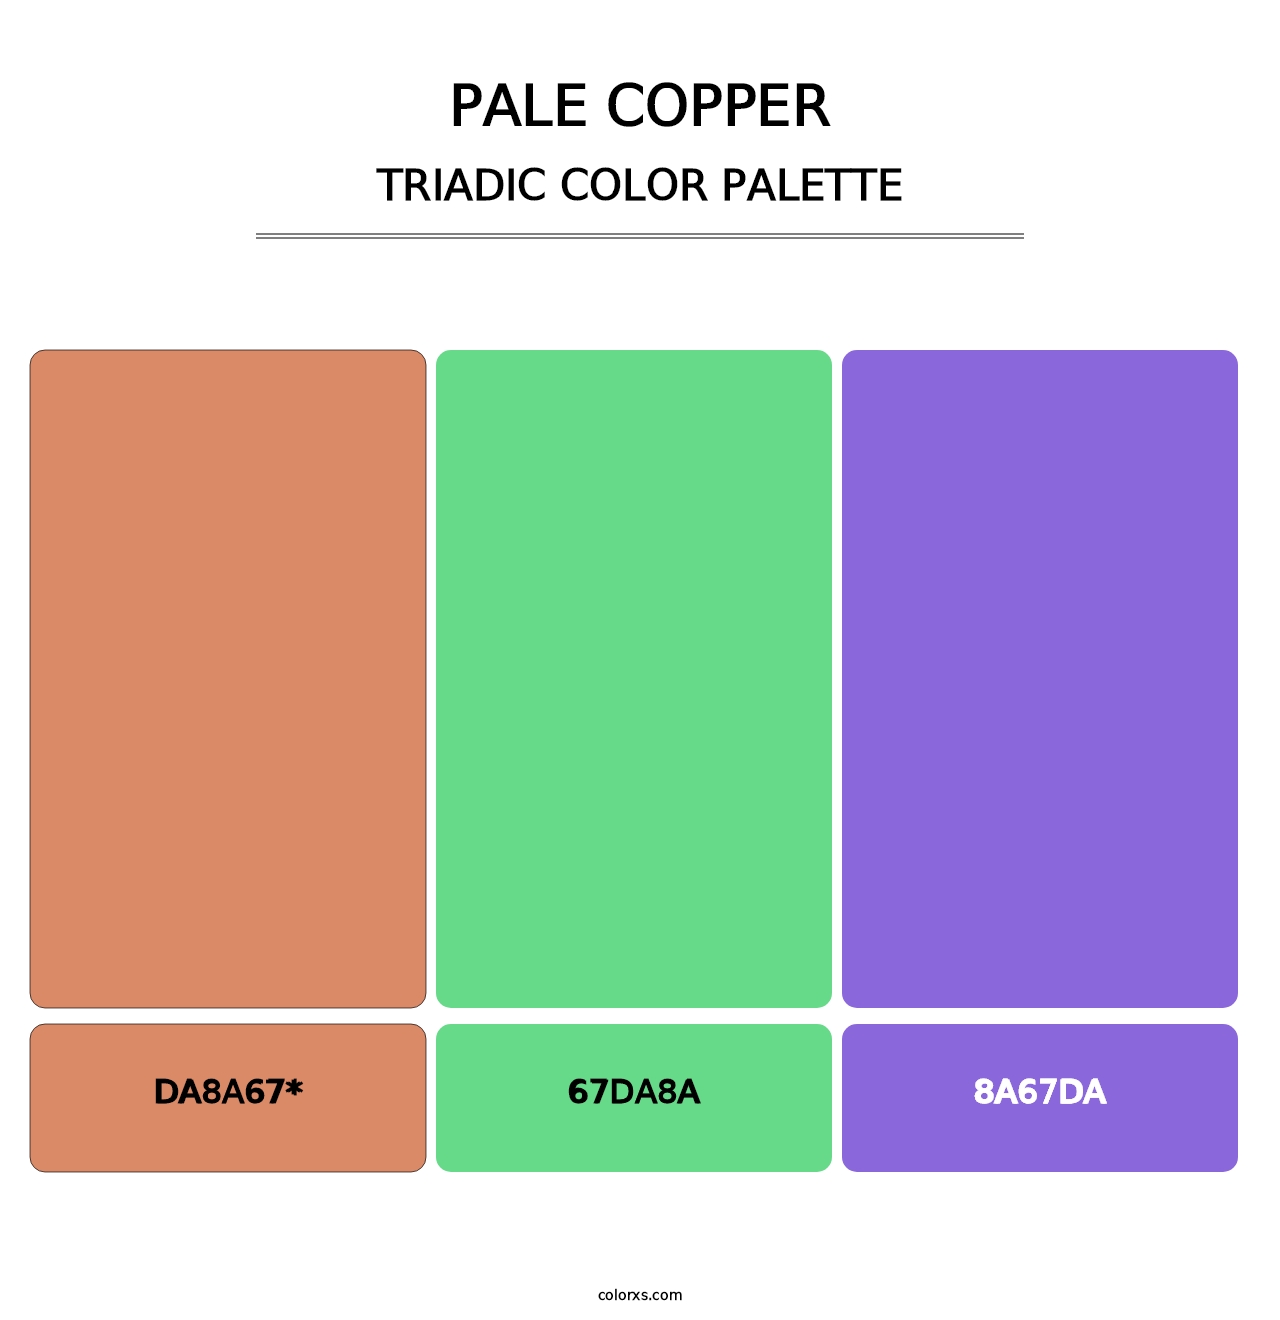 Pale Copper - Triadic Color Palette